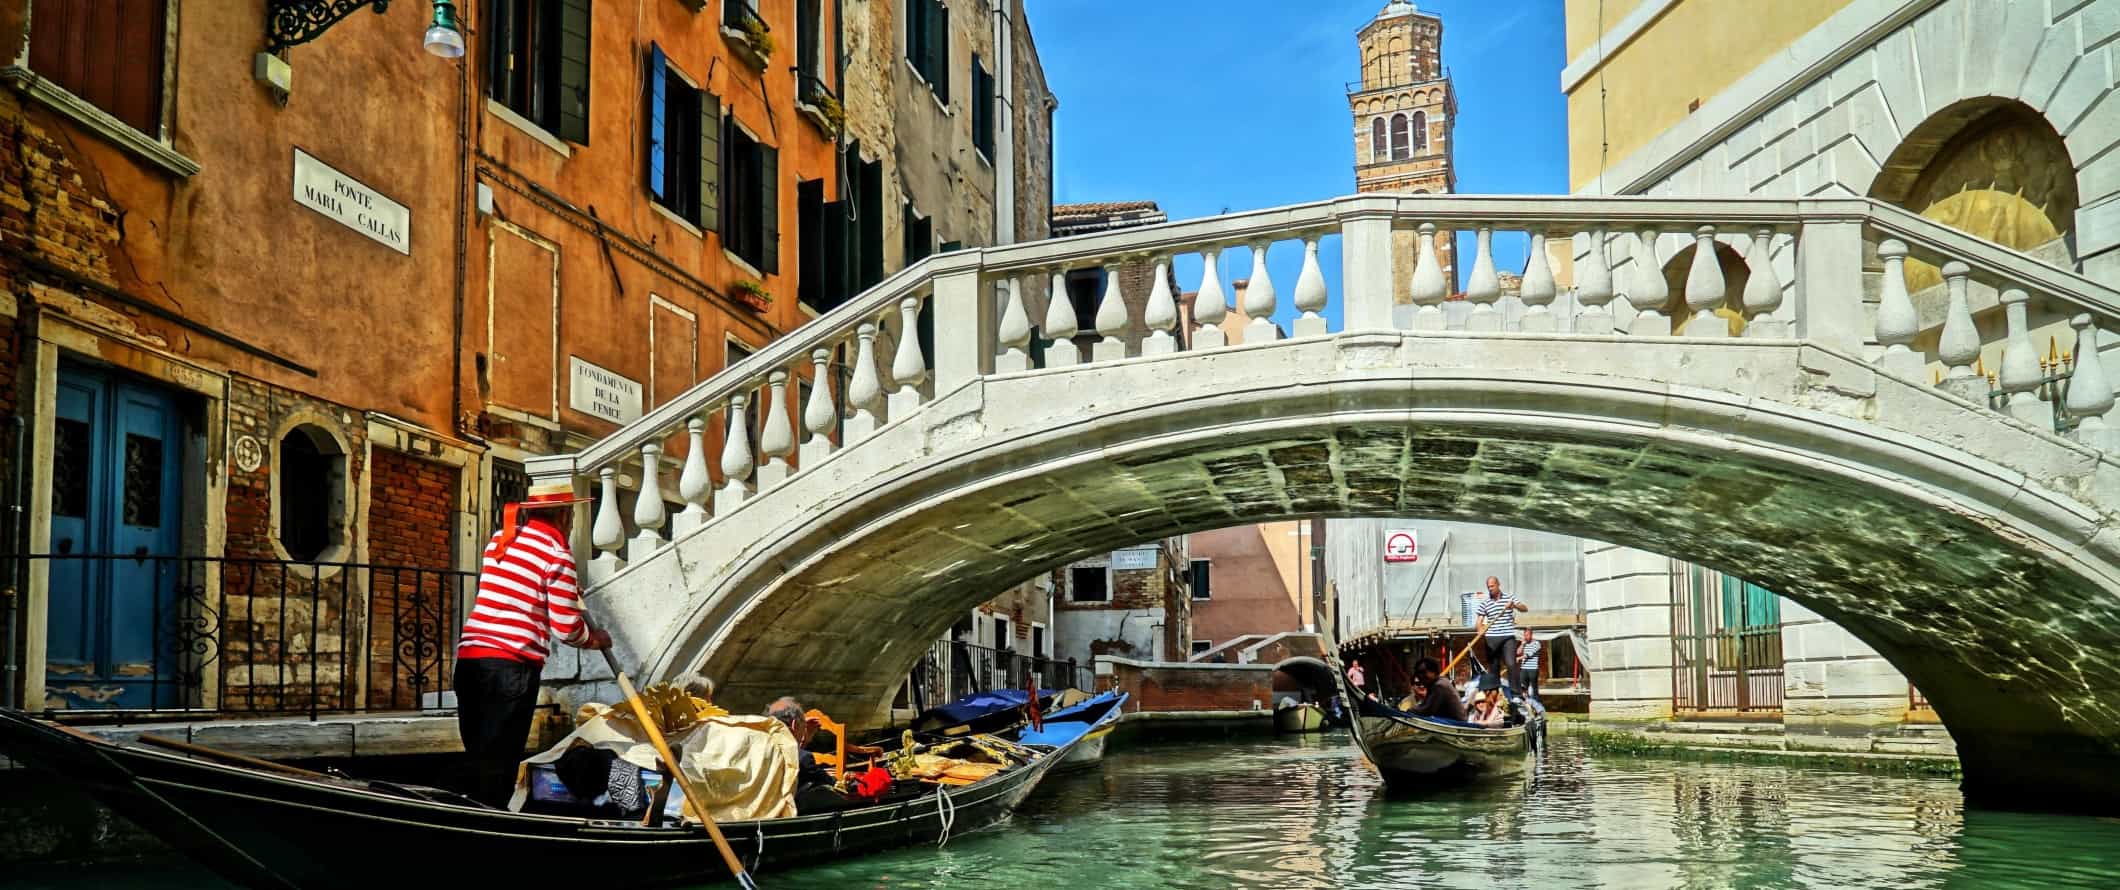 Man steering a gondola through a canal in Venice, Italy